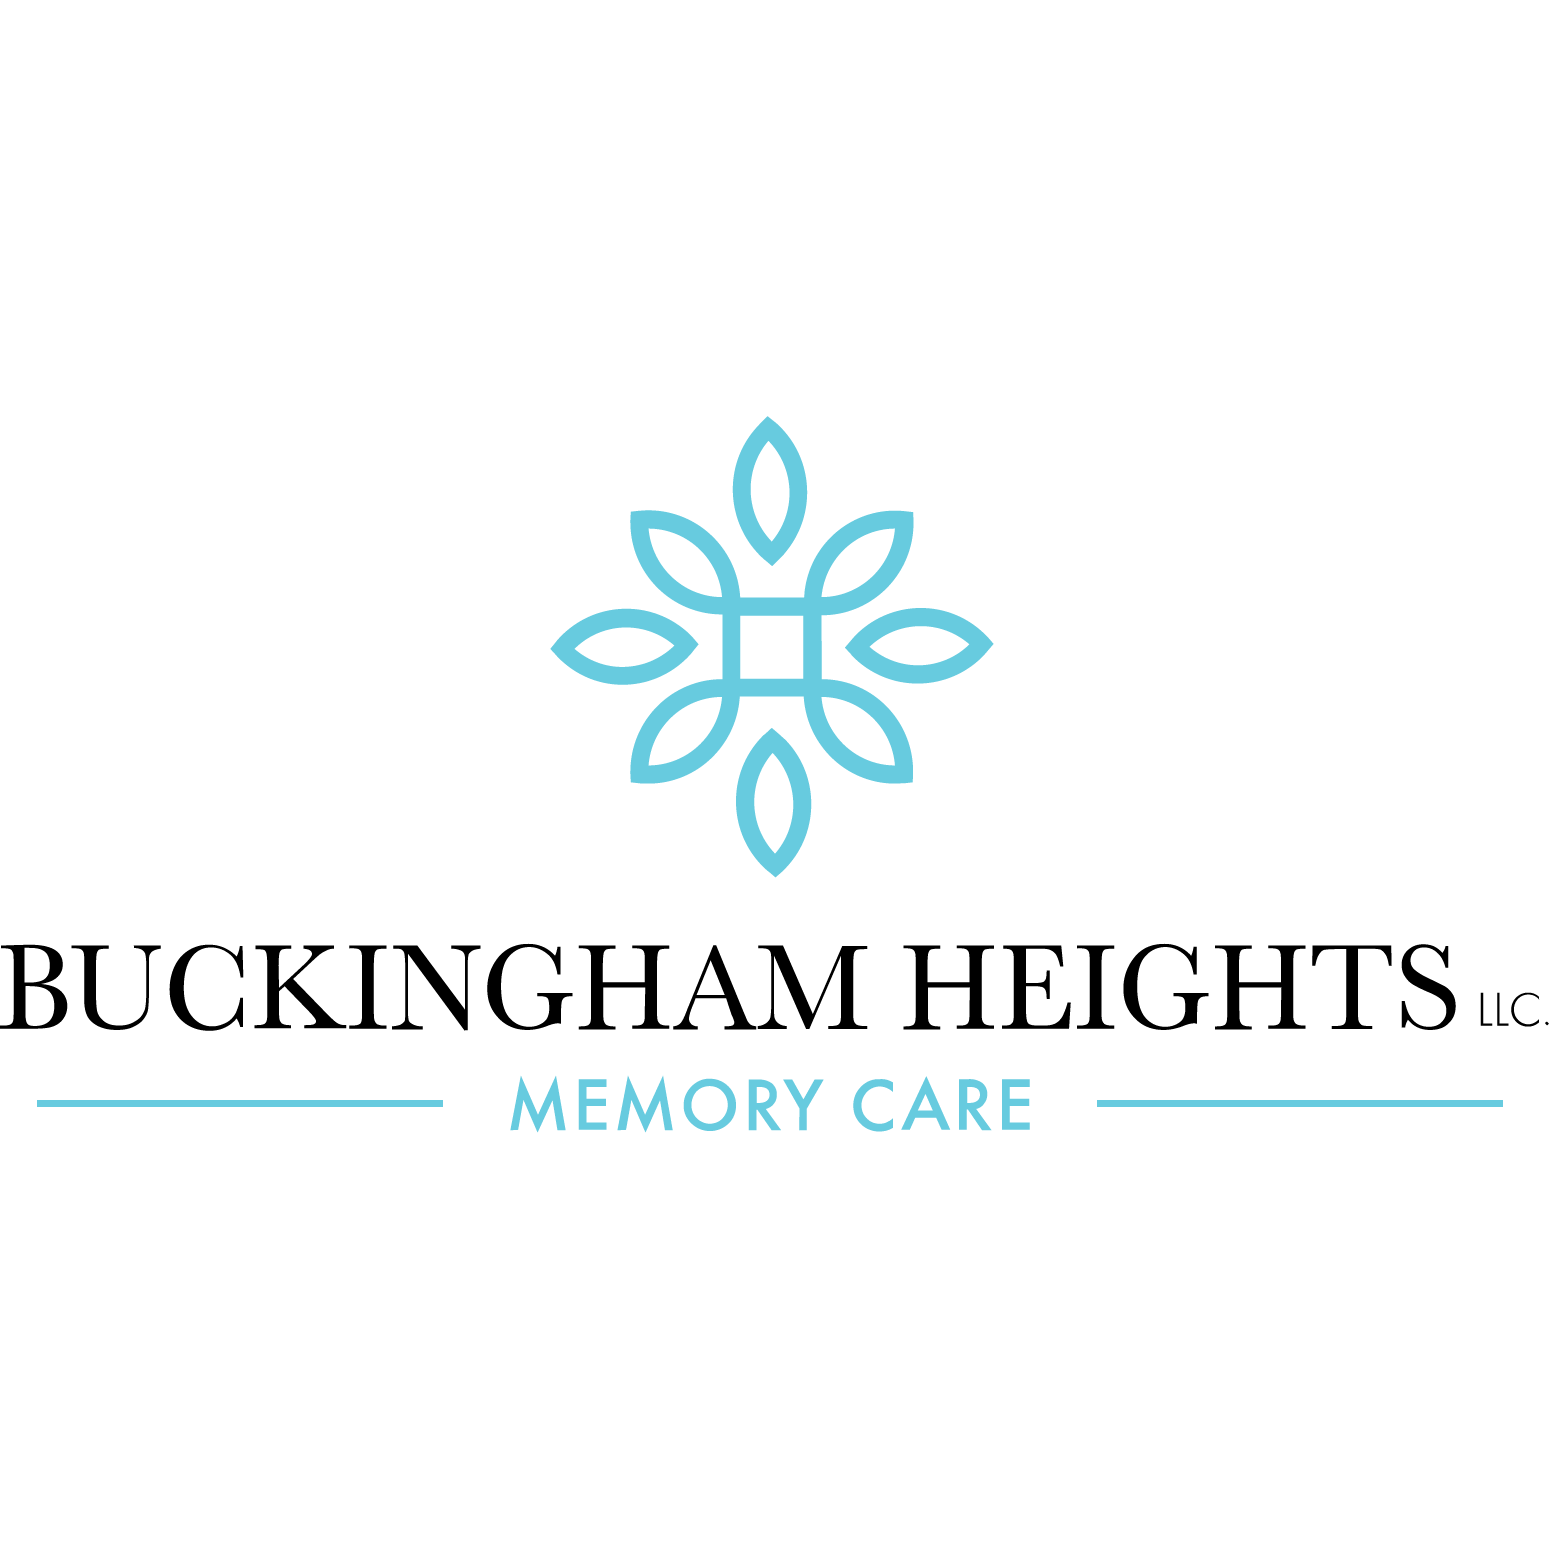 Buckingham Heights Memory Care